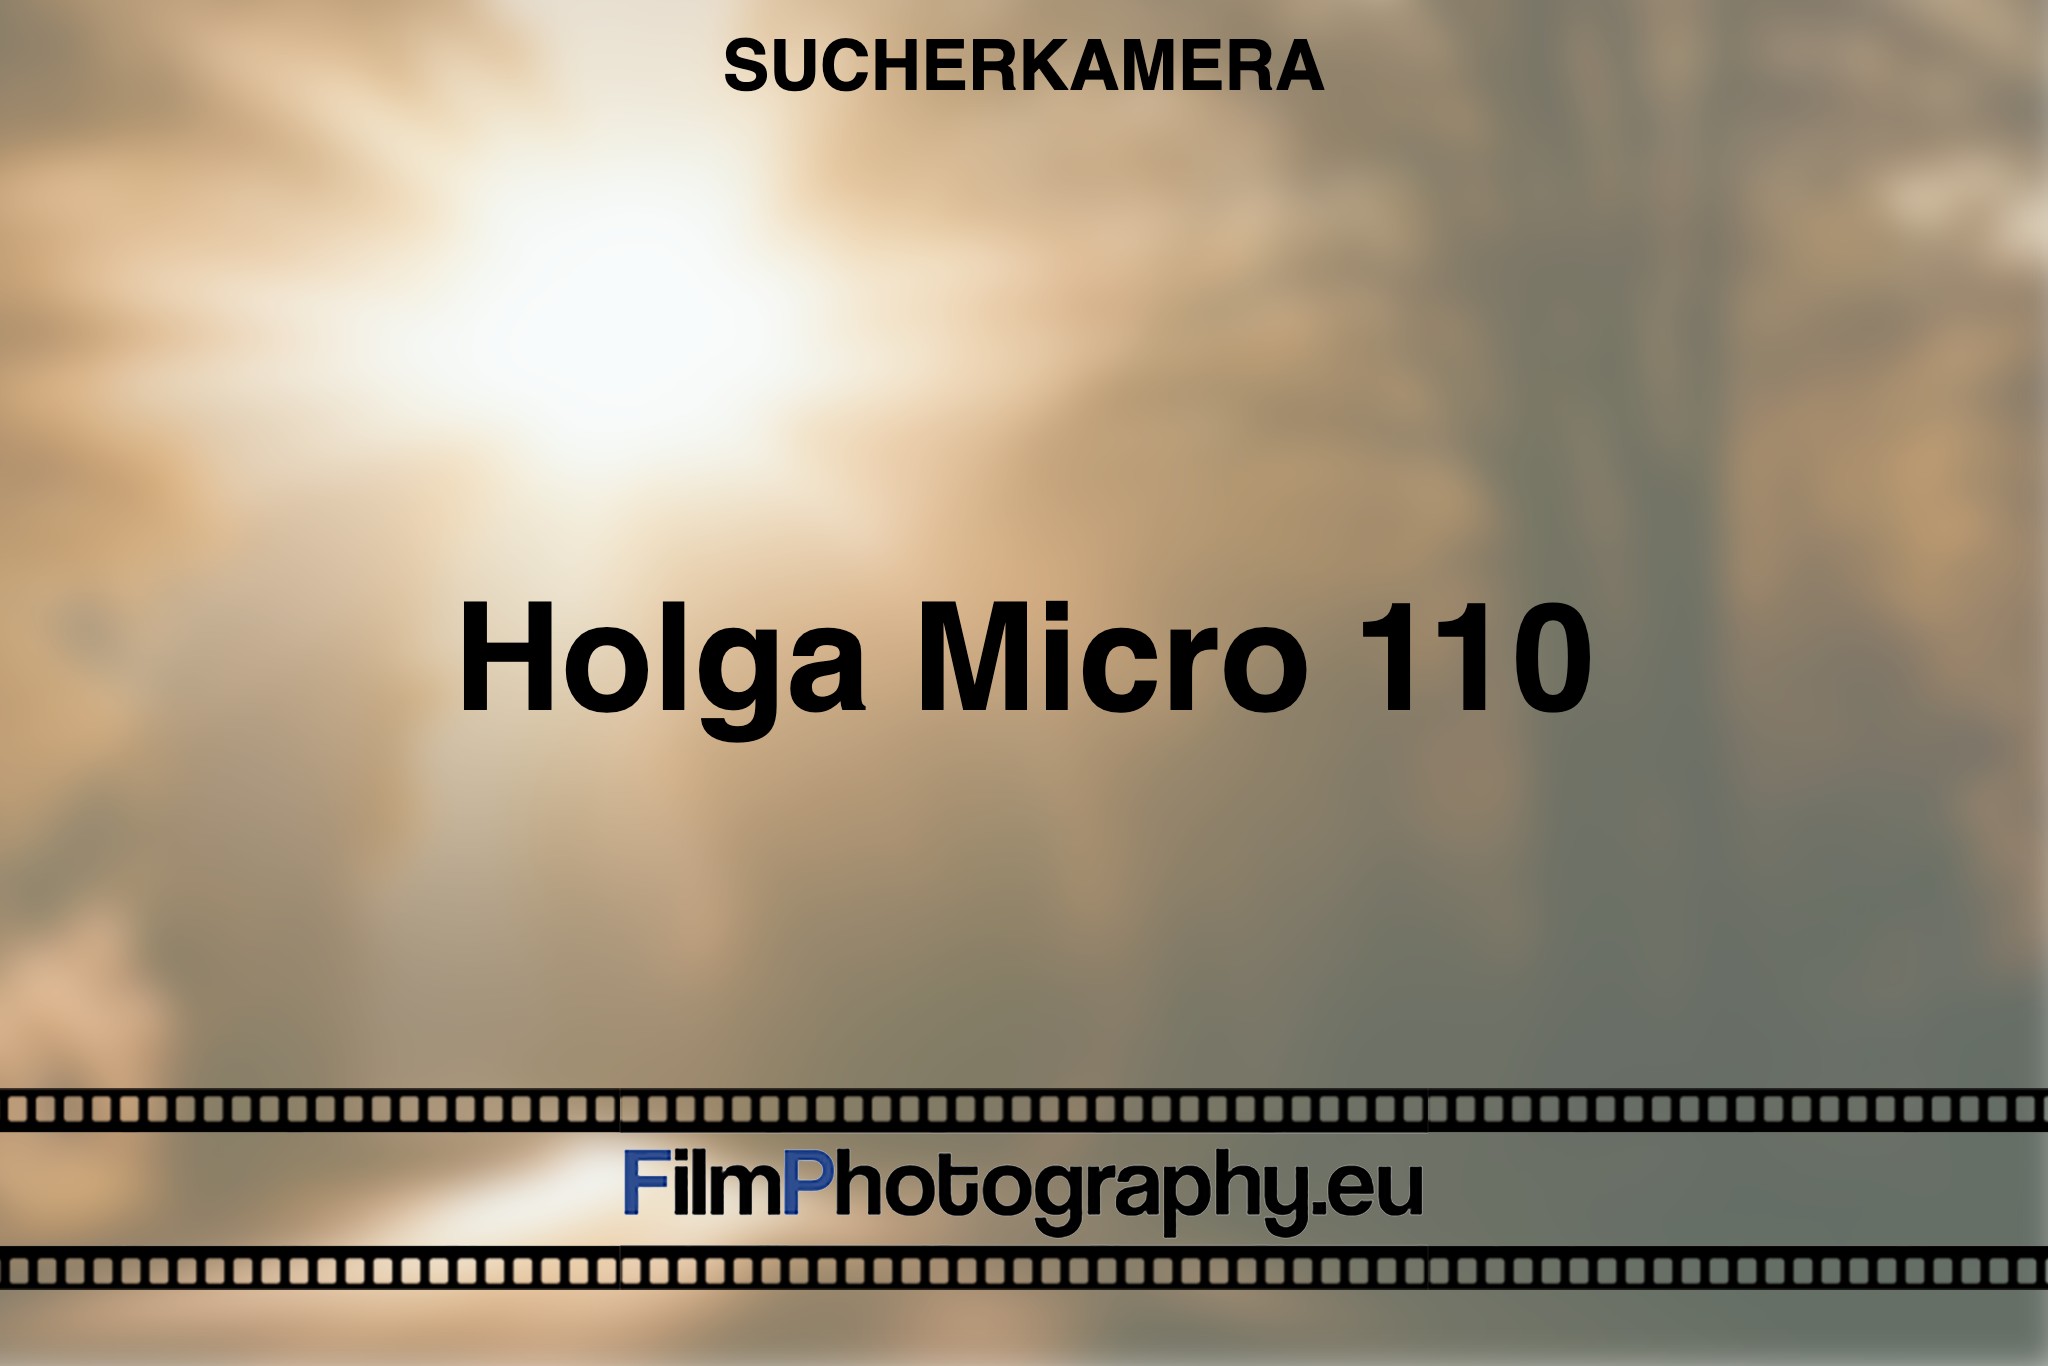 holga-micro-110-sucherkamera-bnv